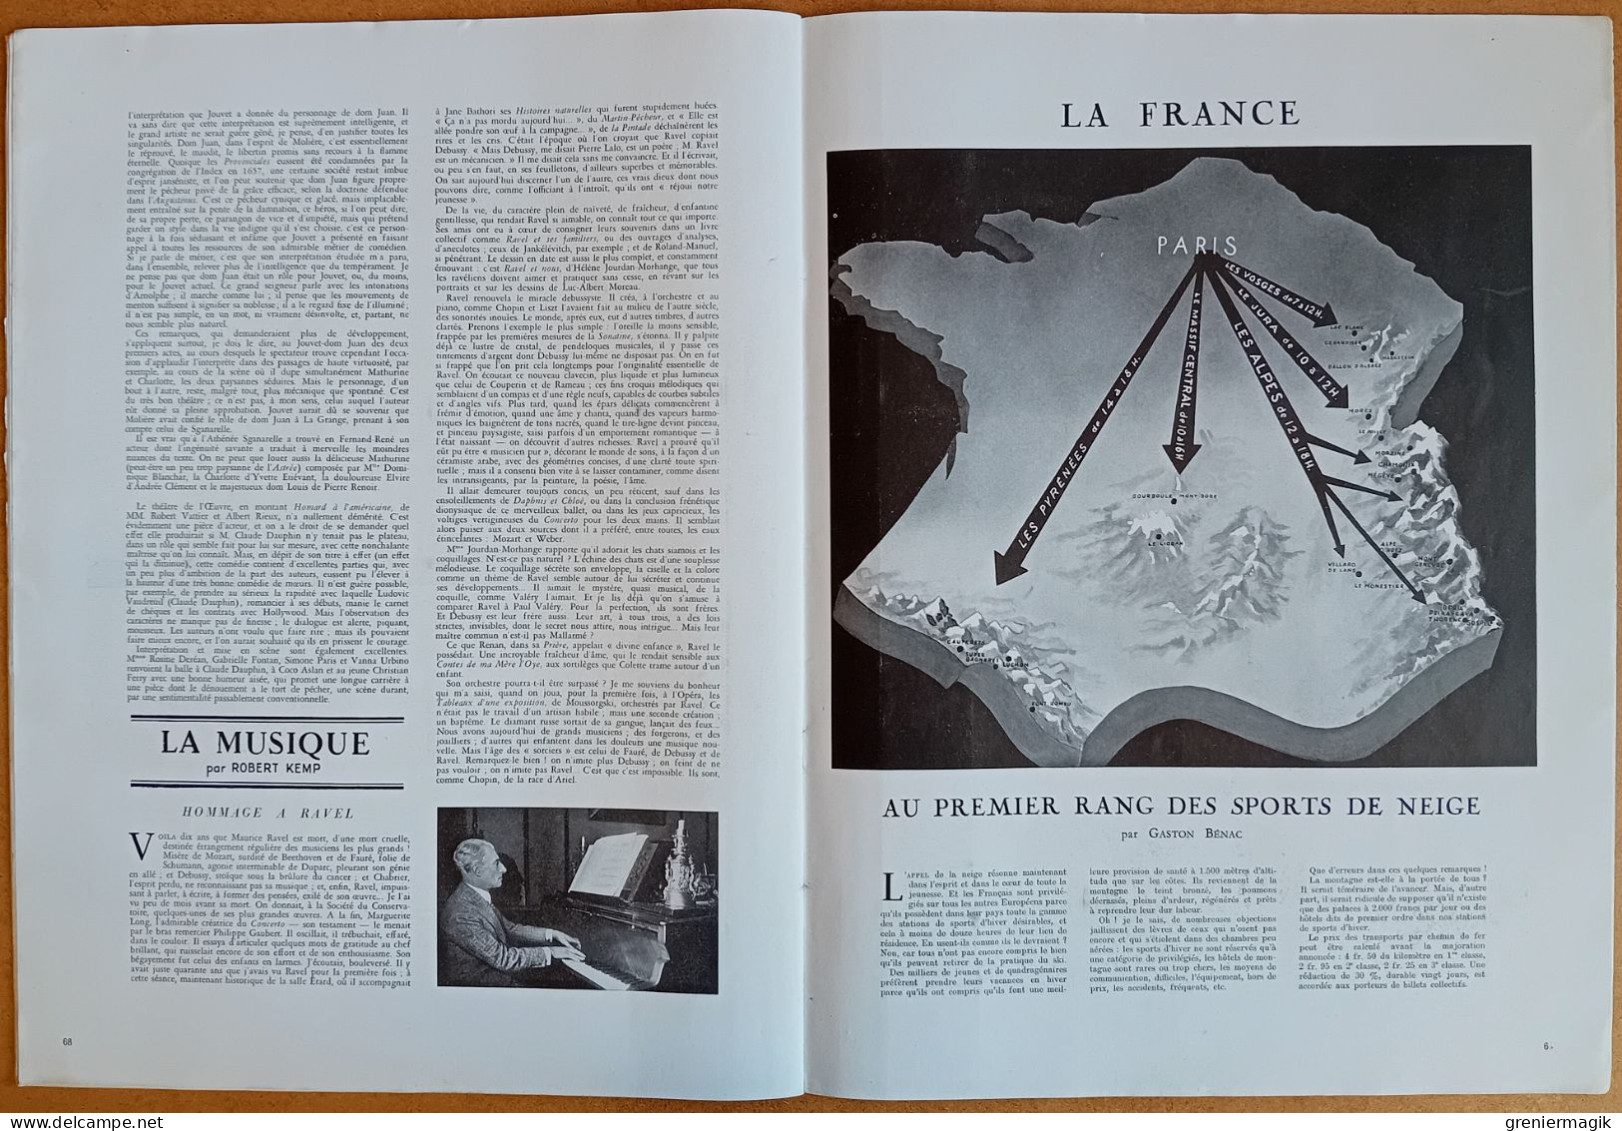 France Illustration N°120 17/01/1948 Palestine/Lautenbach/Stalingrad/Etablissement de l'Inde/Vitesse du son aviation/Ski